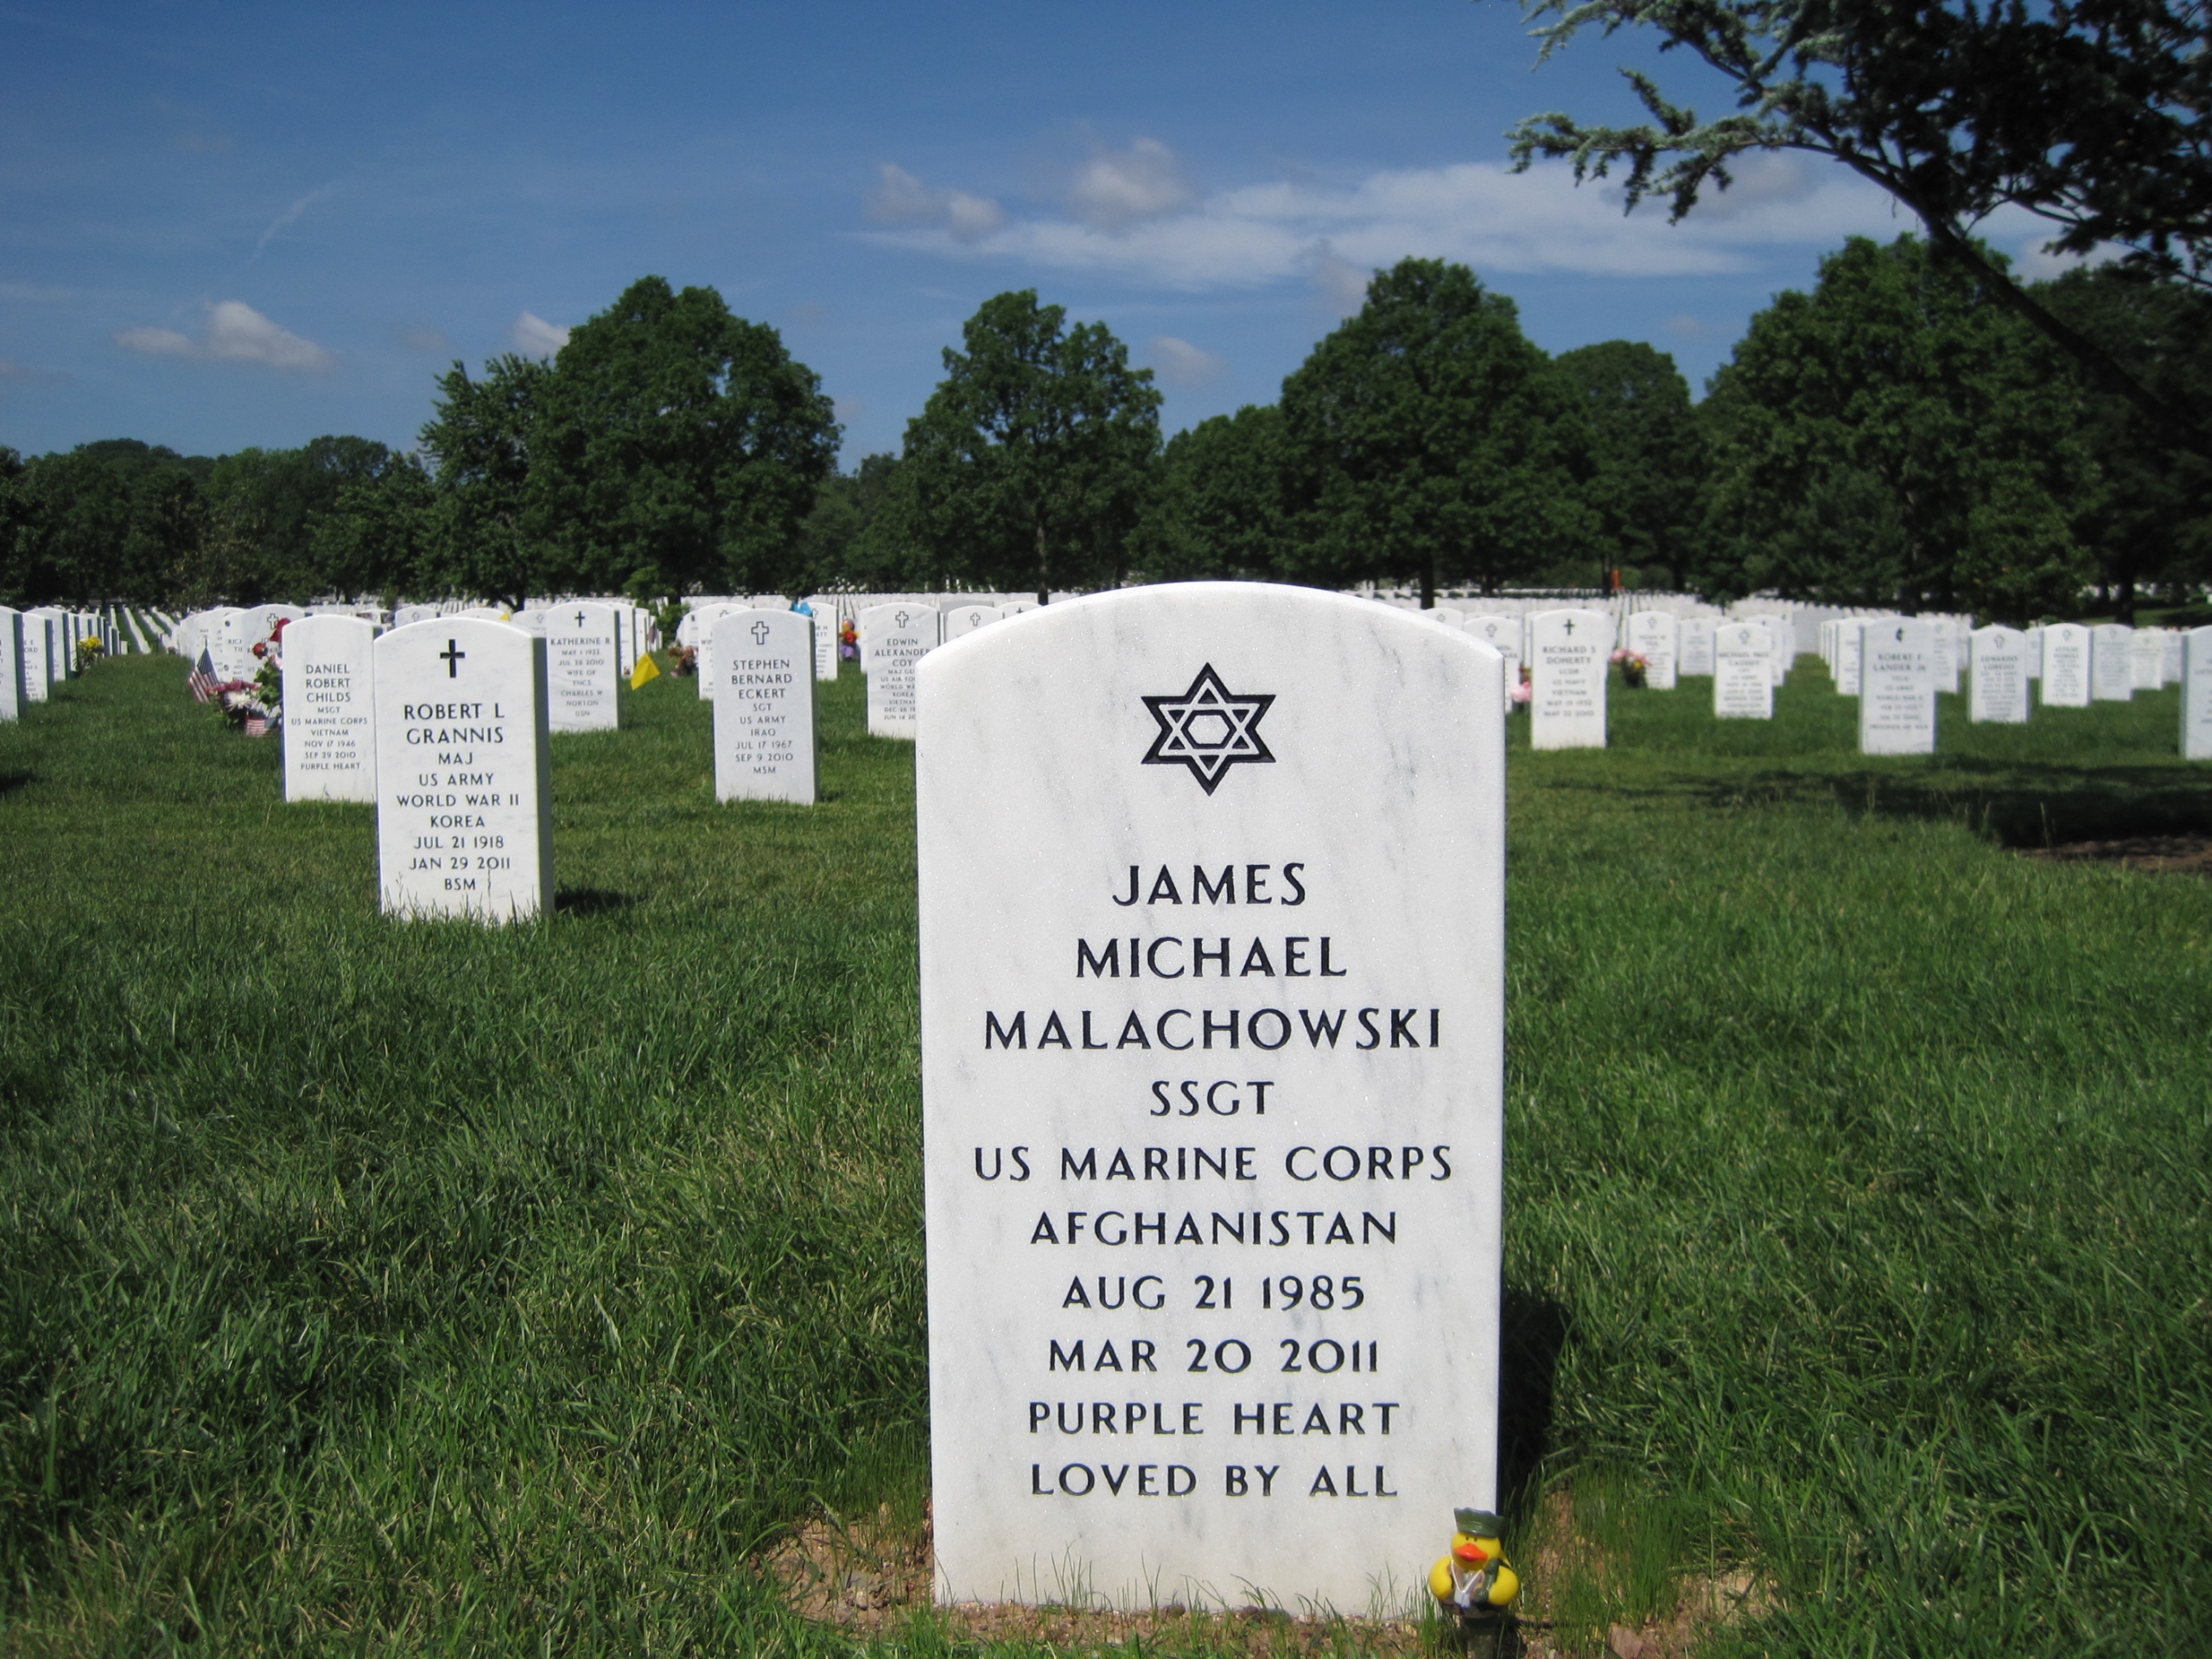 jmmalachowski-gravesite-photo-by-eileen-horan-june-2011-003